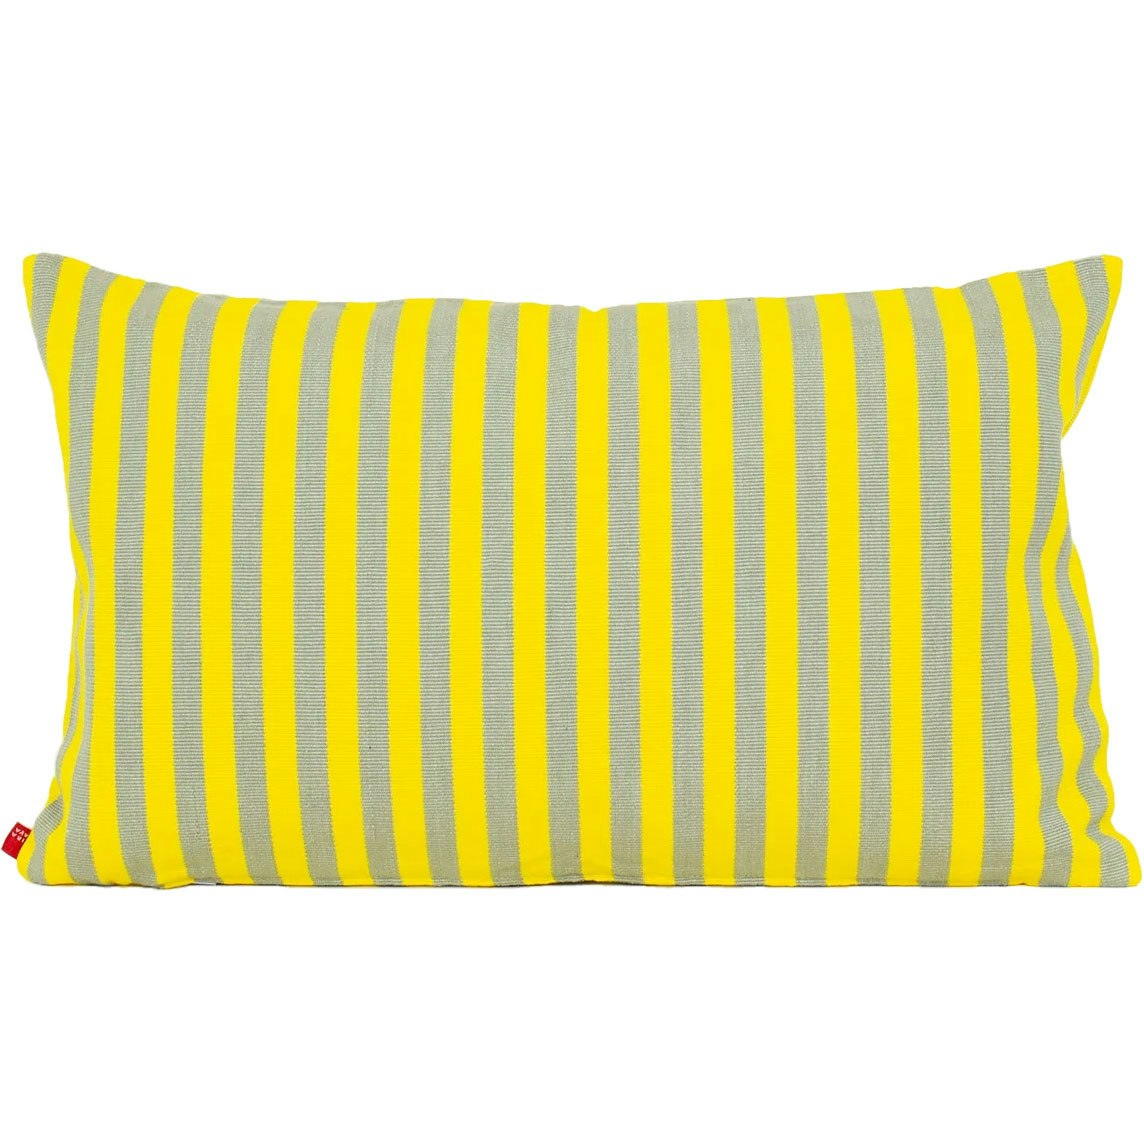 Diana Cushion Cover 30x50 cm, Yellow/Grey